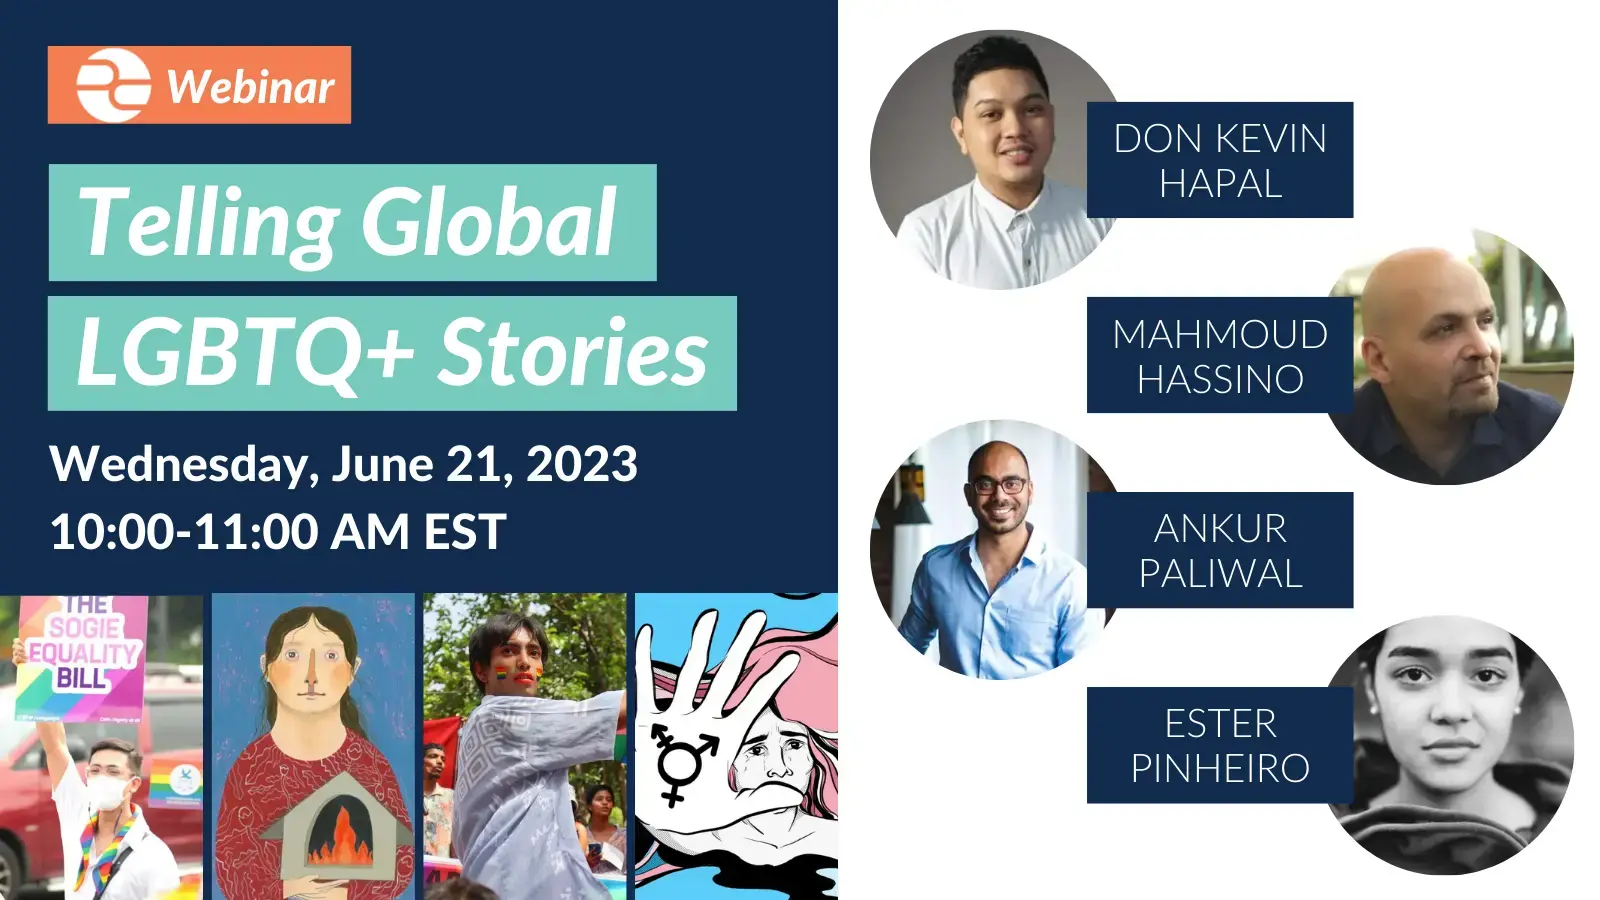 Telling Global LGBTQ+ Stories, panelist images